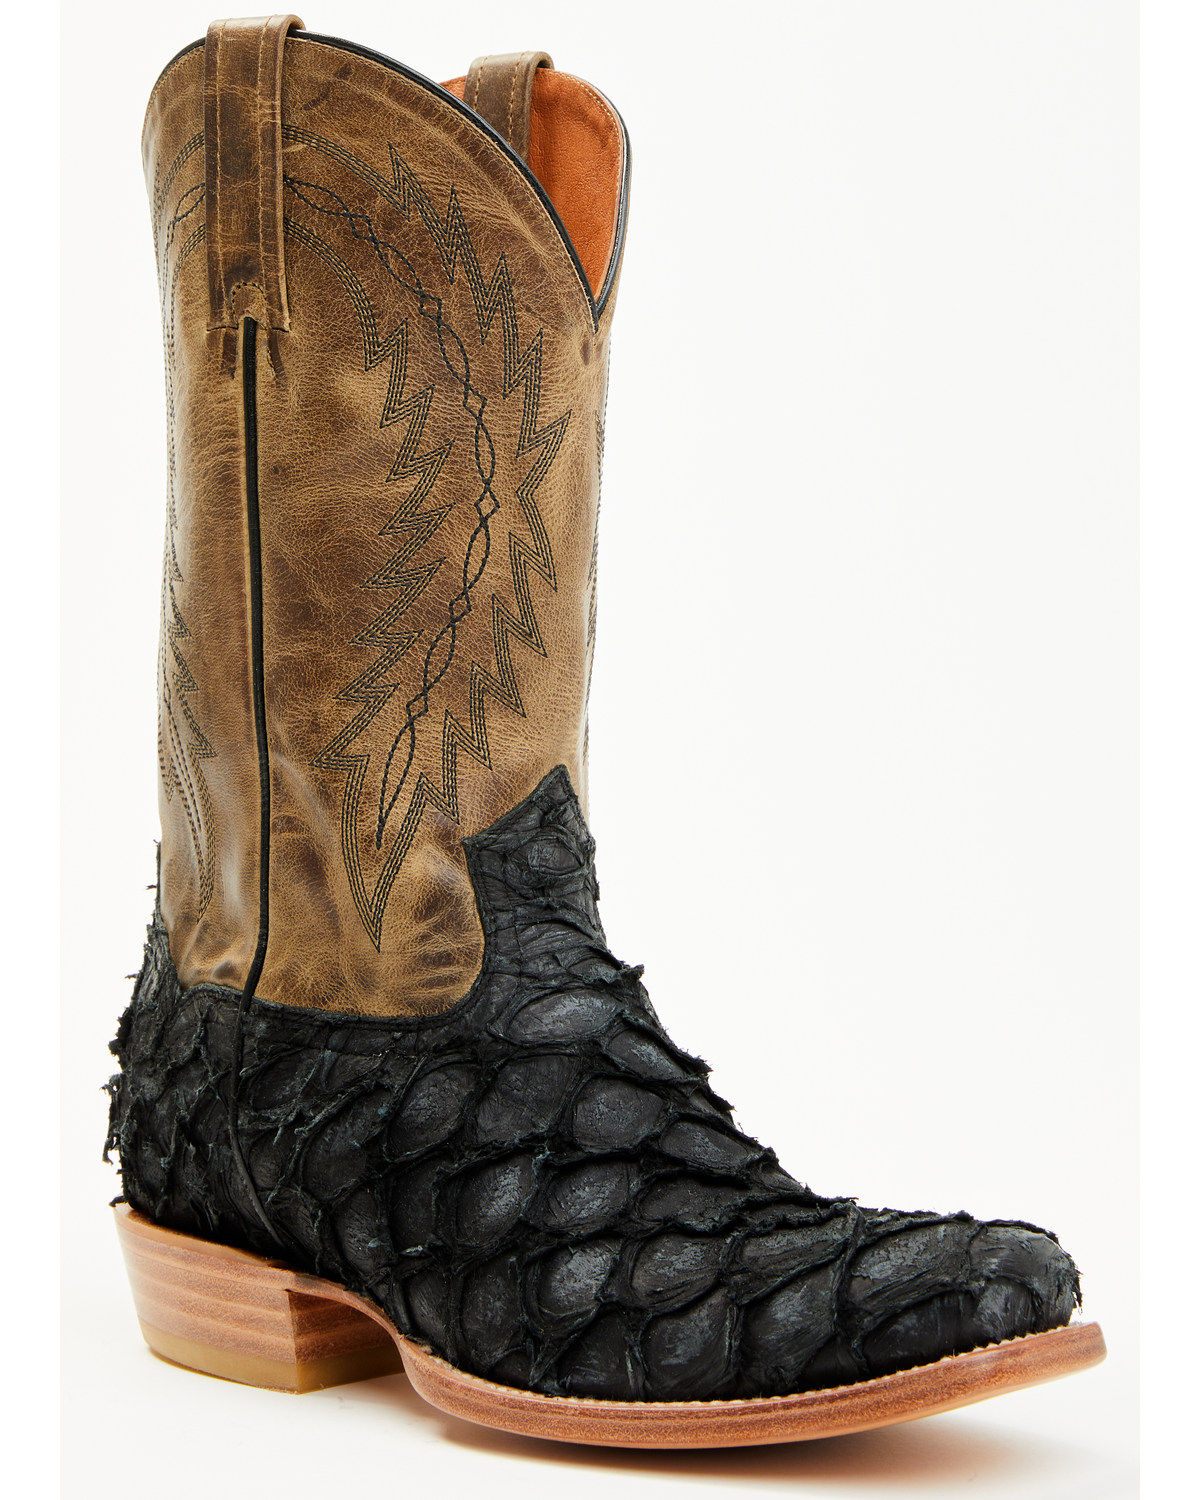 Cody James Men's Vaqueras Exotic Pirarucu Western Boots - Square Toe